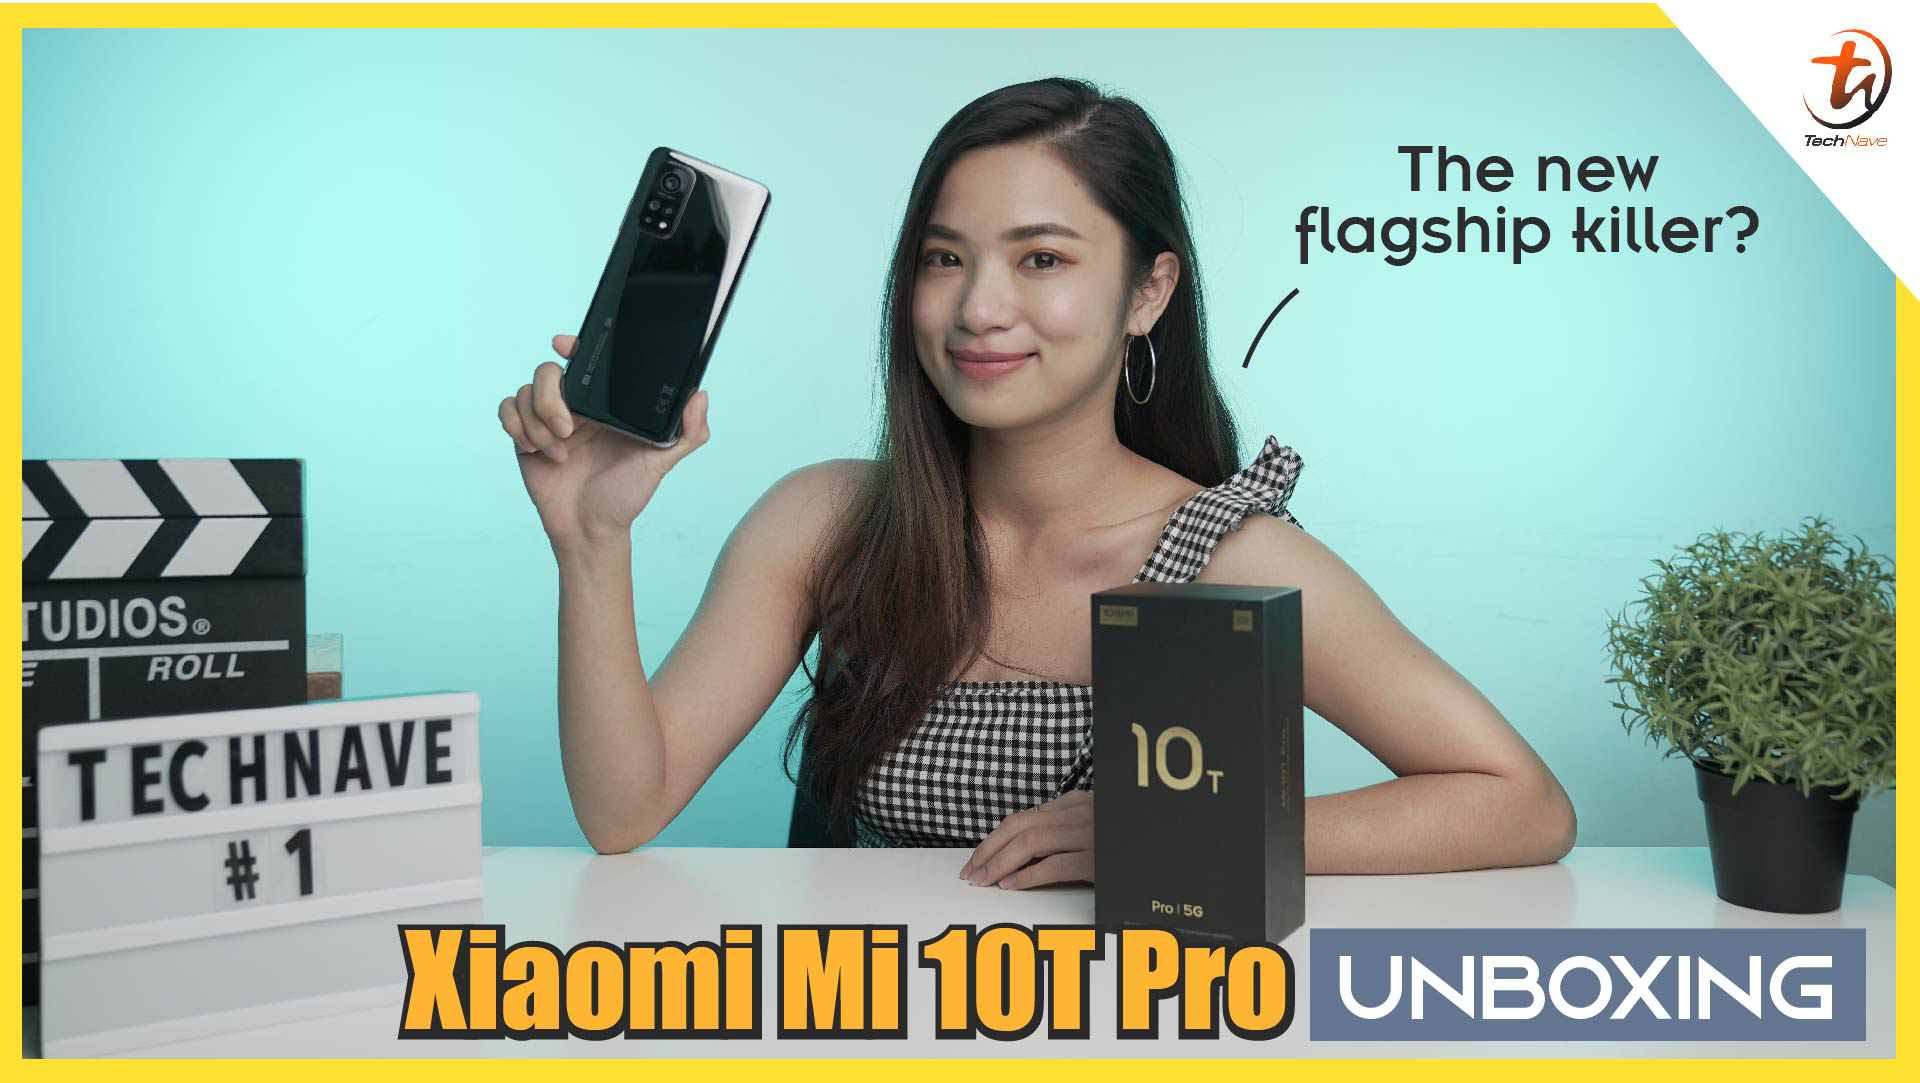 Xiaomi Mi 10T Pro - Flagship killer?! Is it legit? |TechNave Unboxing and Hands-On Video